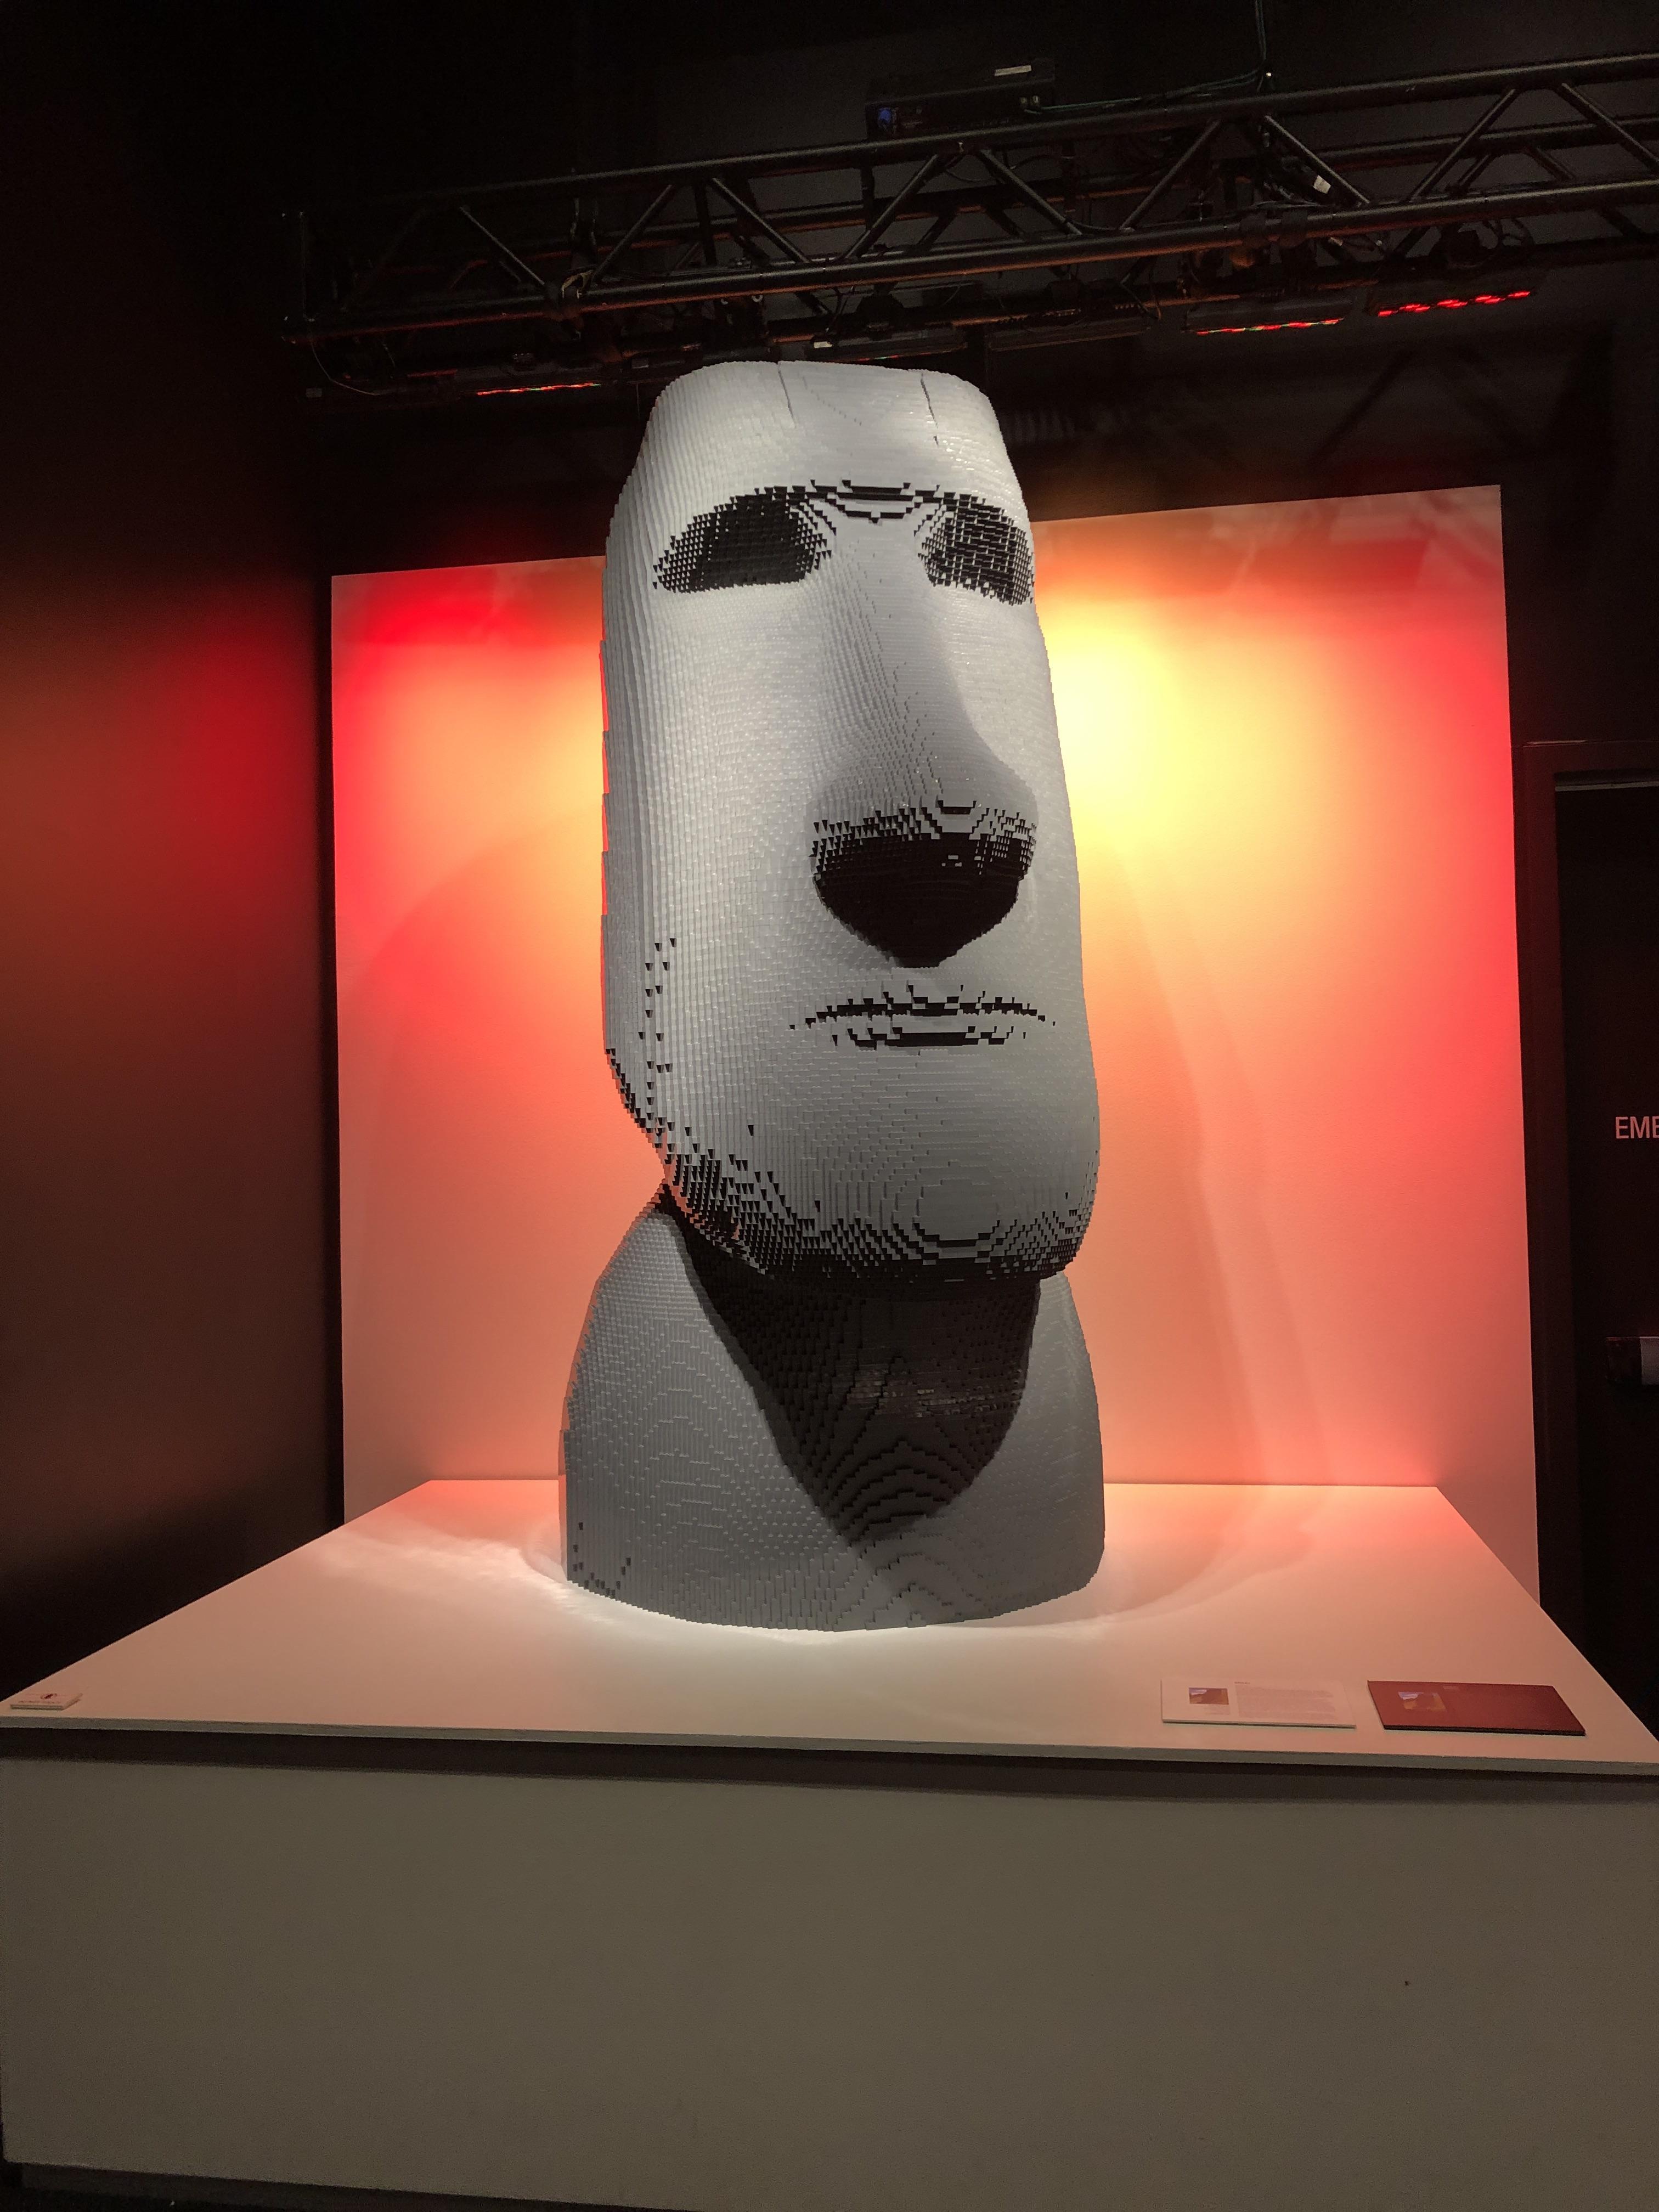 1:1 Easter Island head made of LEGO